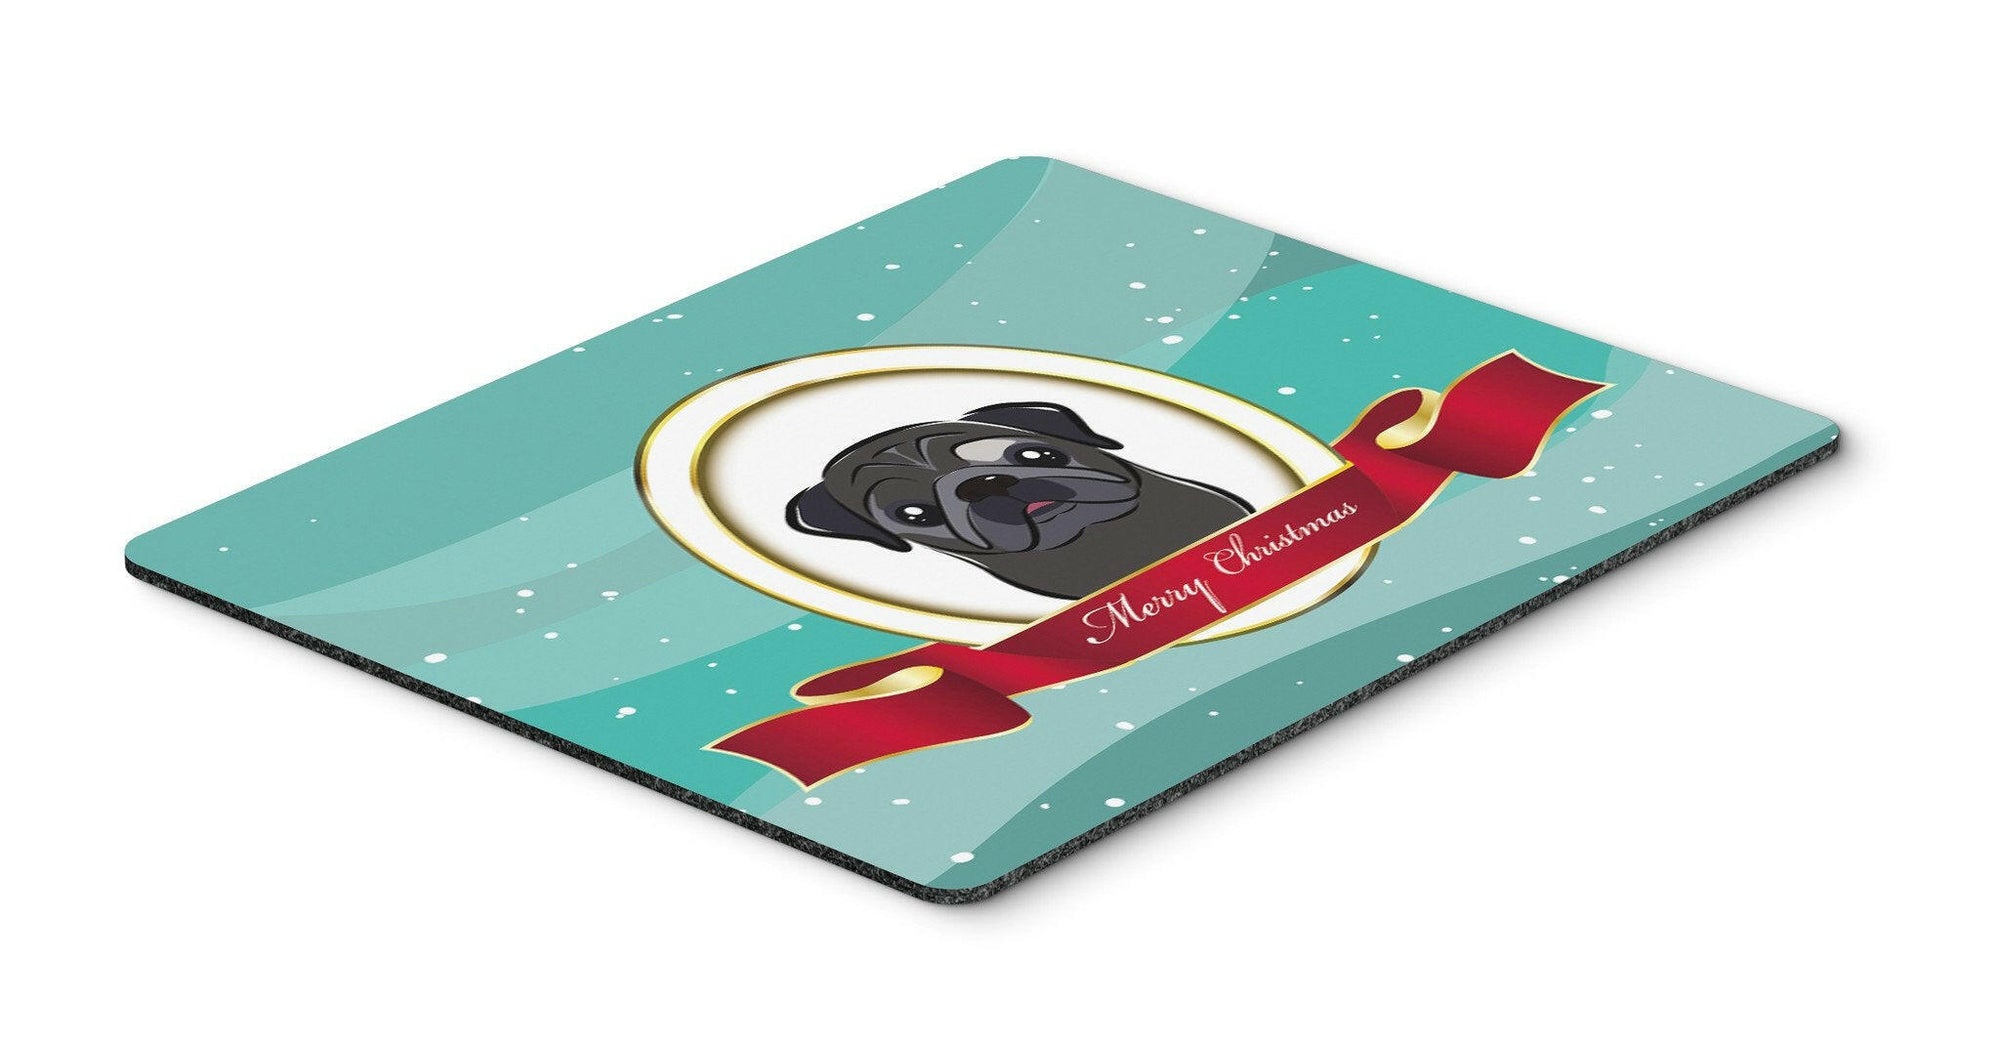 Black Pug Merry Christmas Mouse Pad, Hot Pad or Trivet BB1573MP by Caroline's Treasures